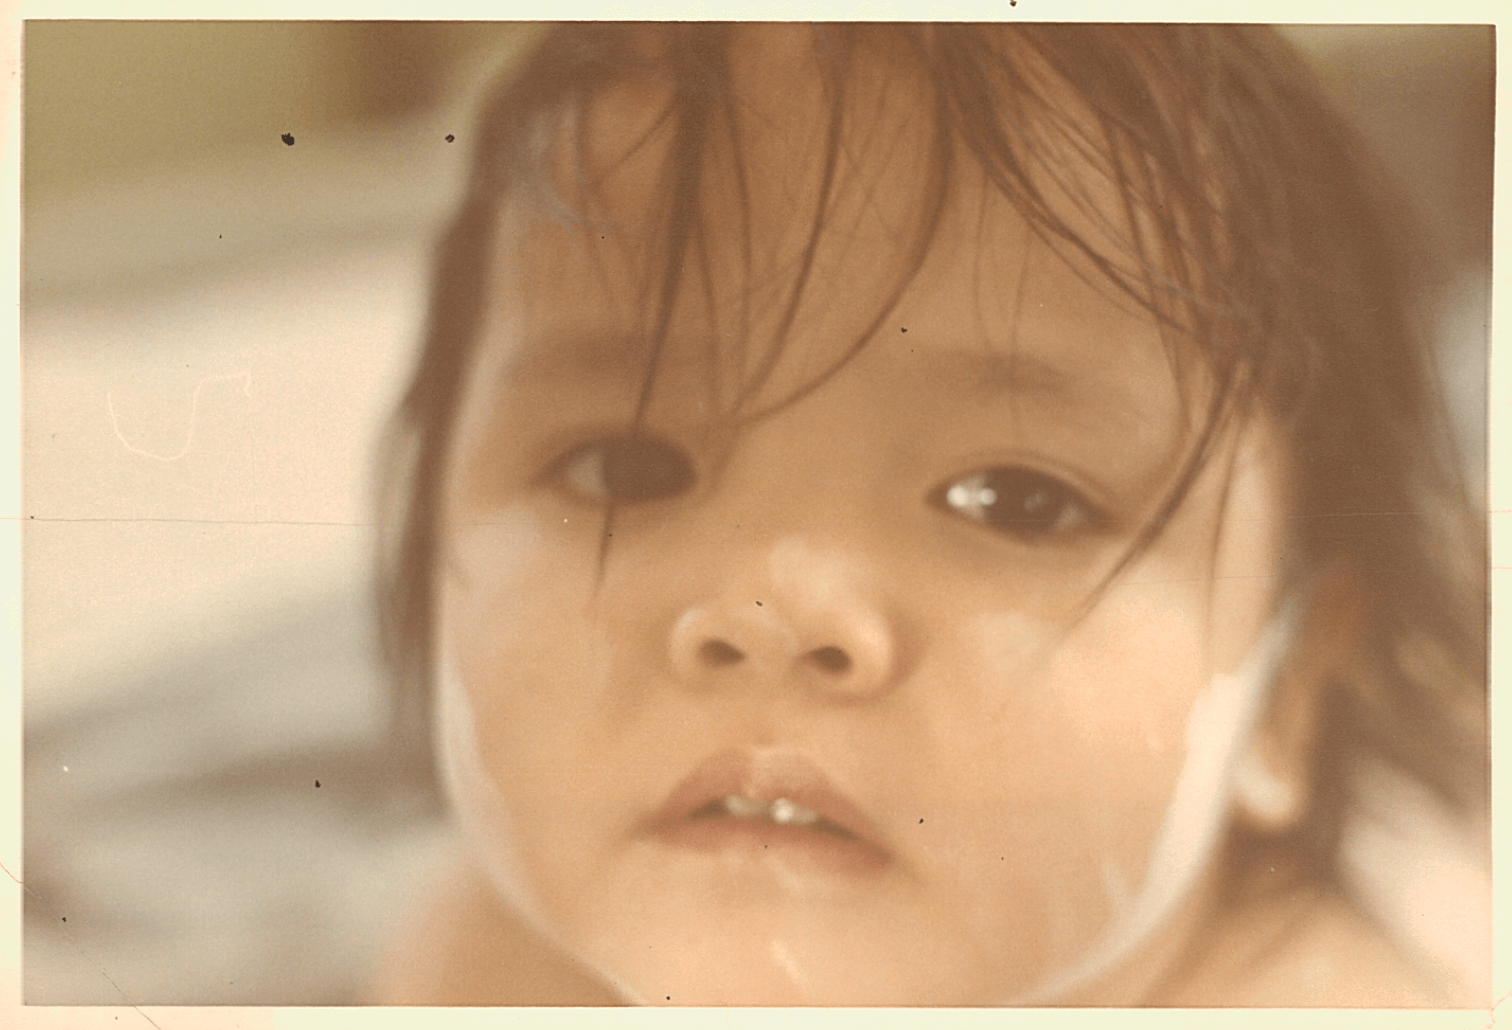 A close up of an Asian child, looking sad.